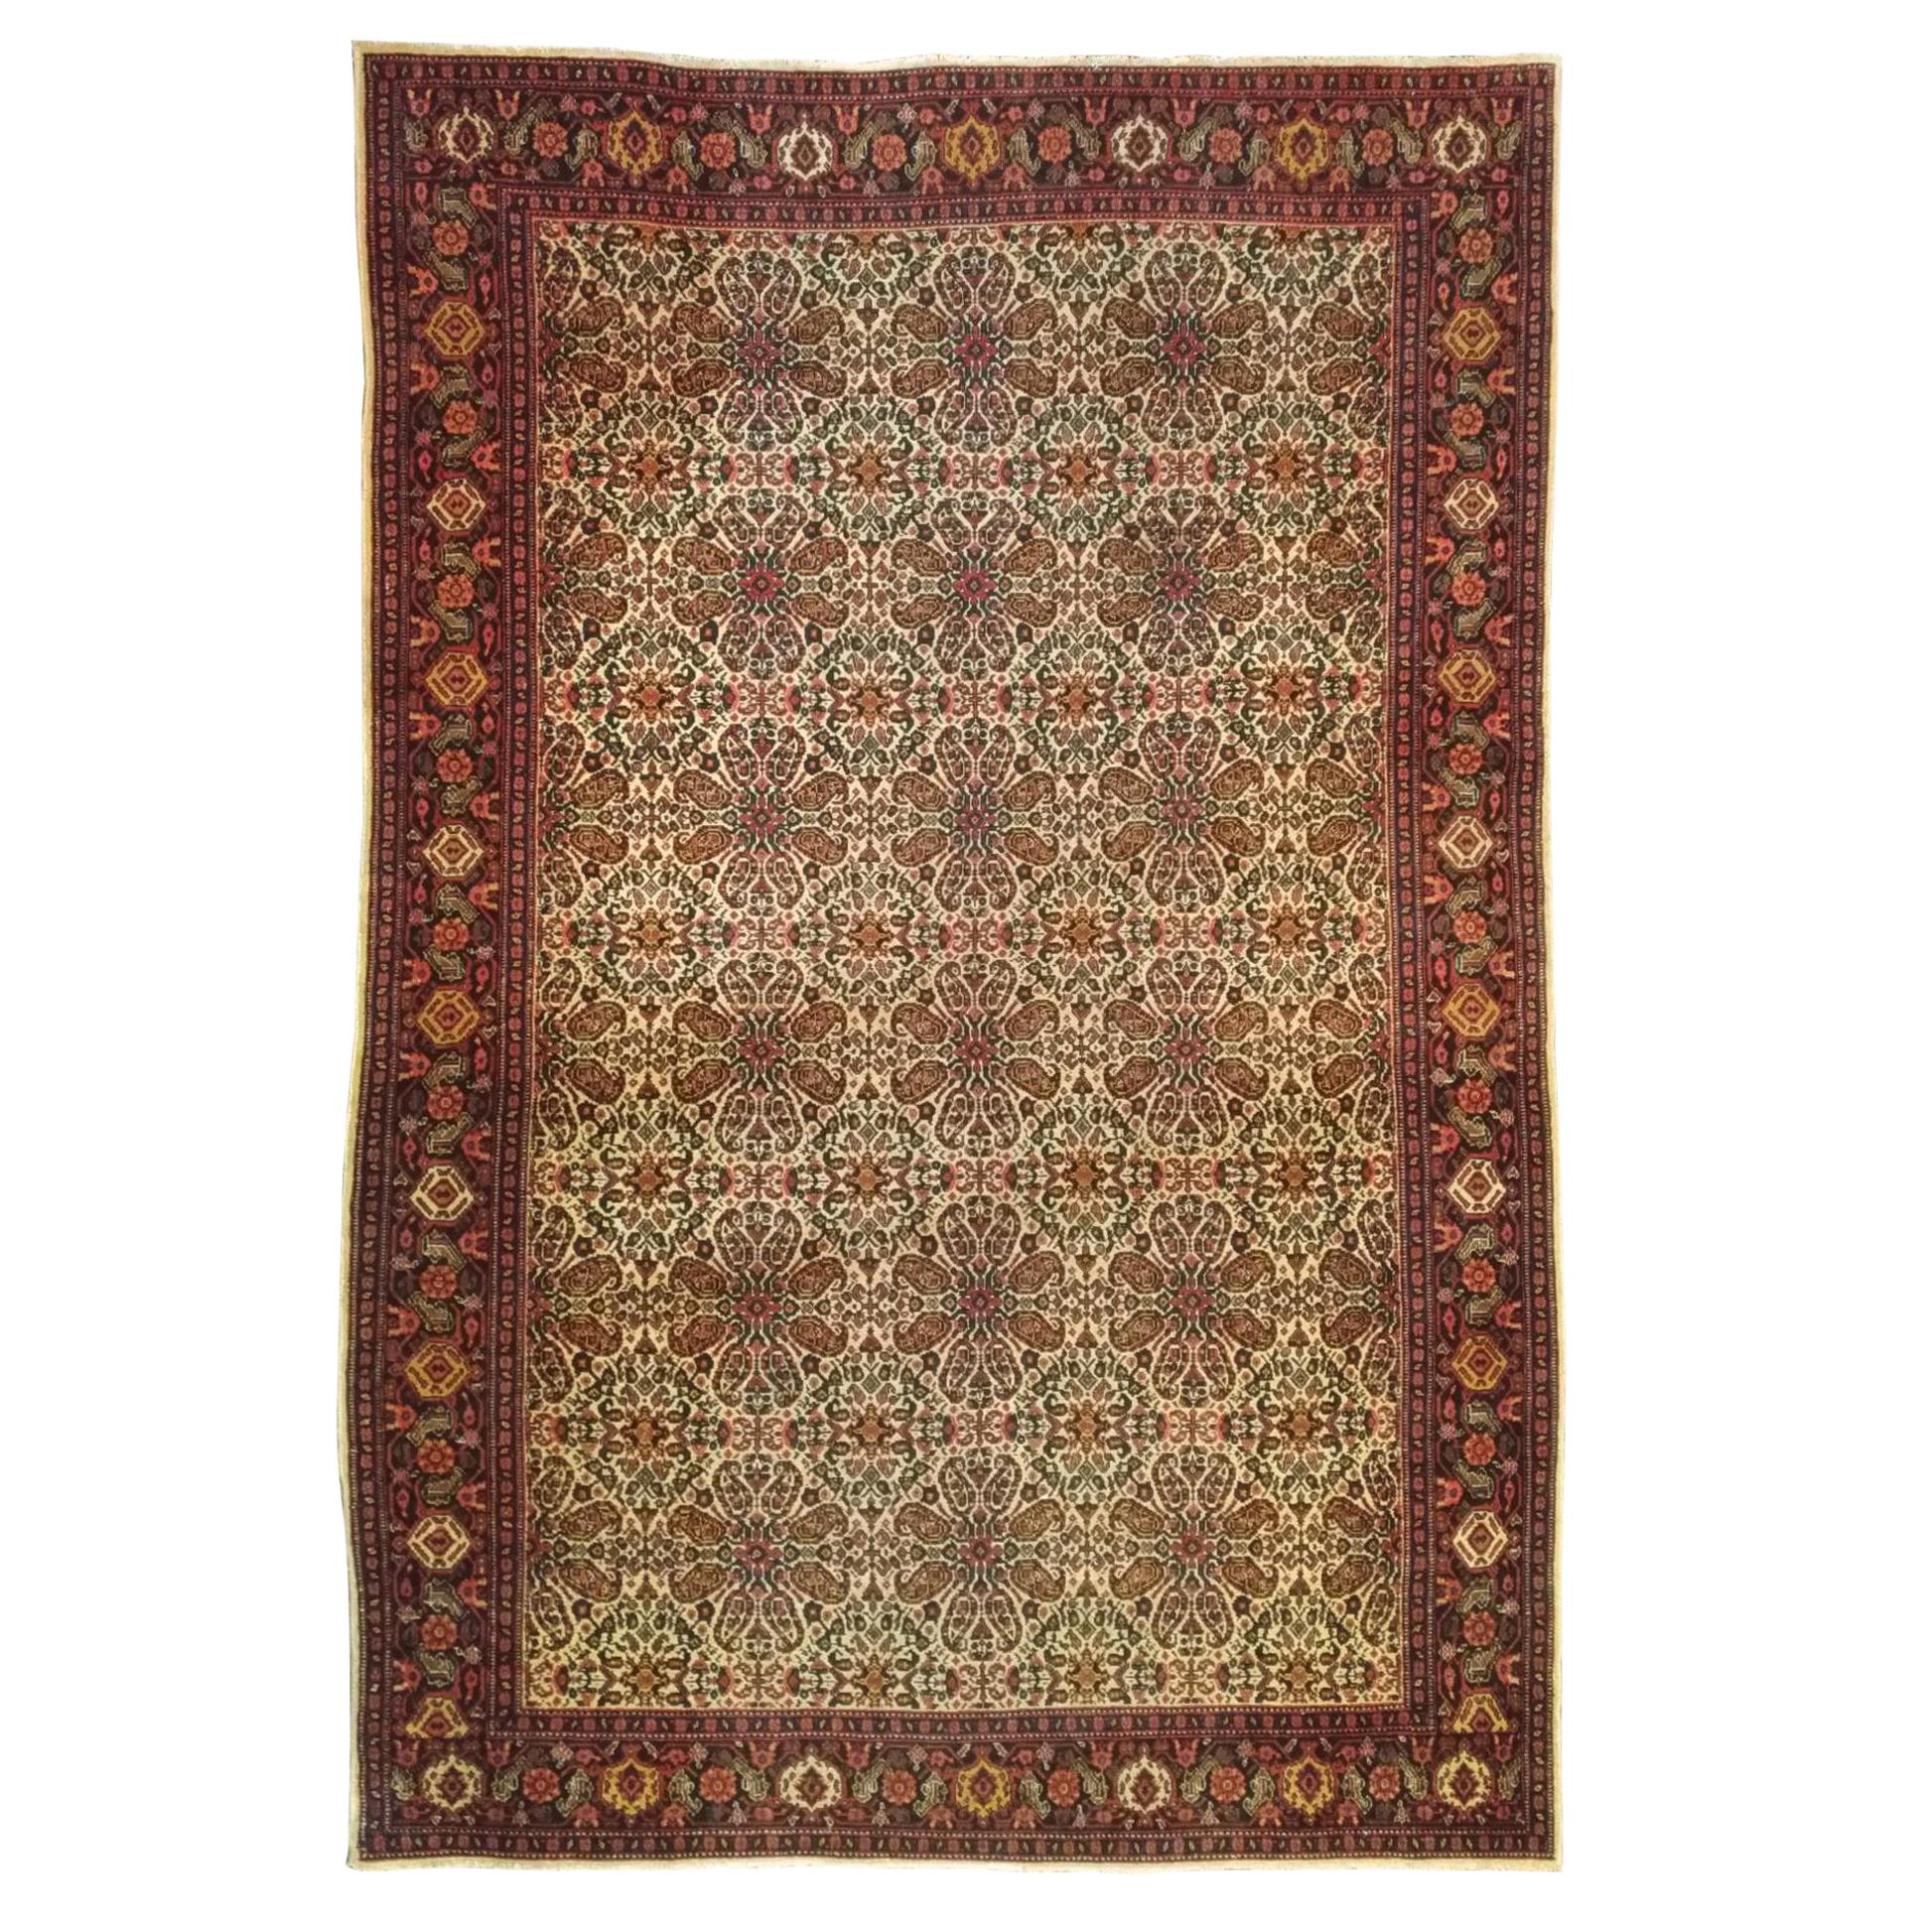 1023 - Magnificent 19th Century Kurdish Senneh Carpet For Sale